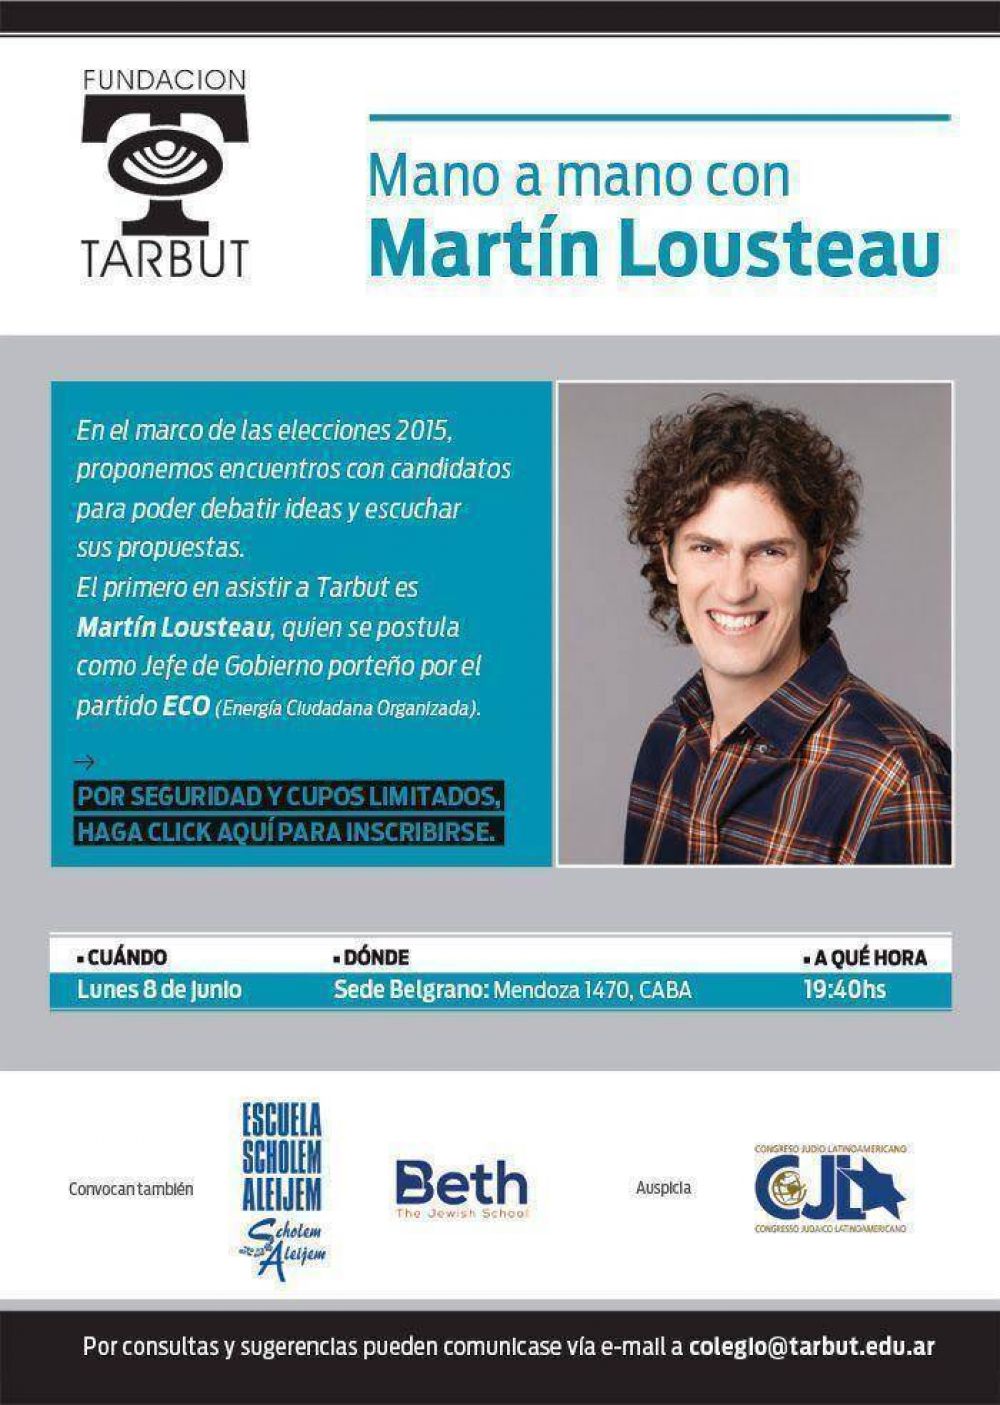 Martn Lousteau dar una charla en Tarbut - Sede Belgrano